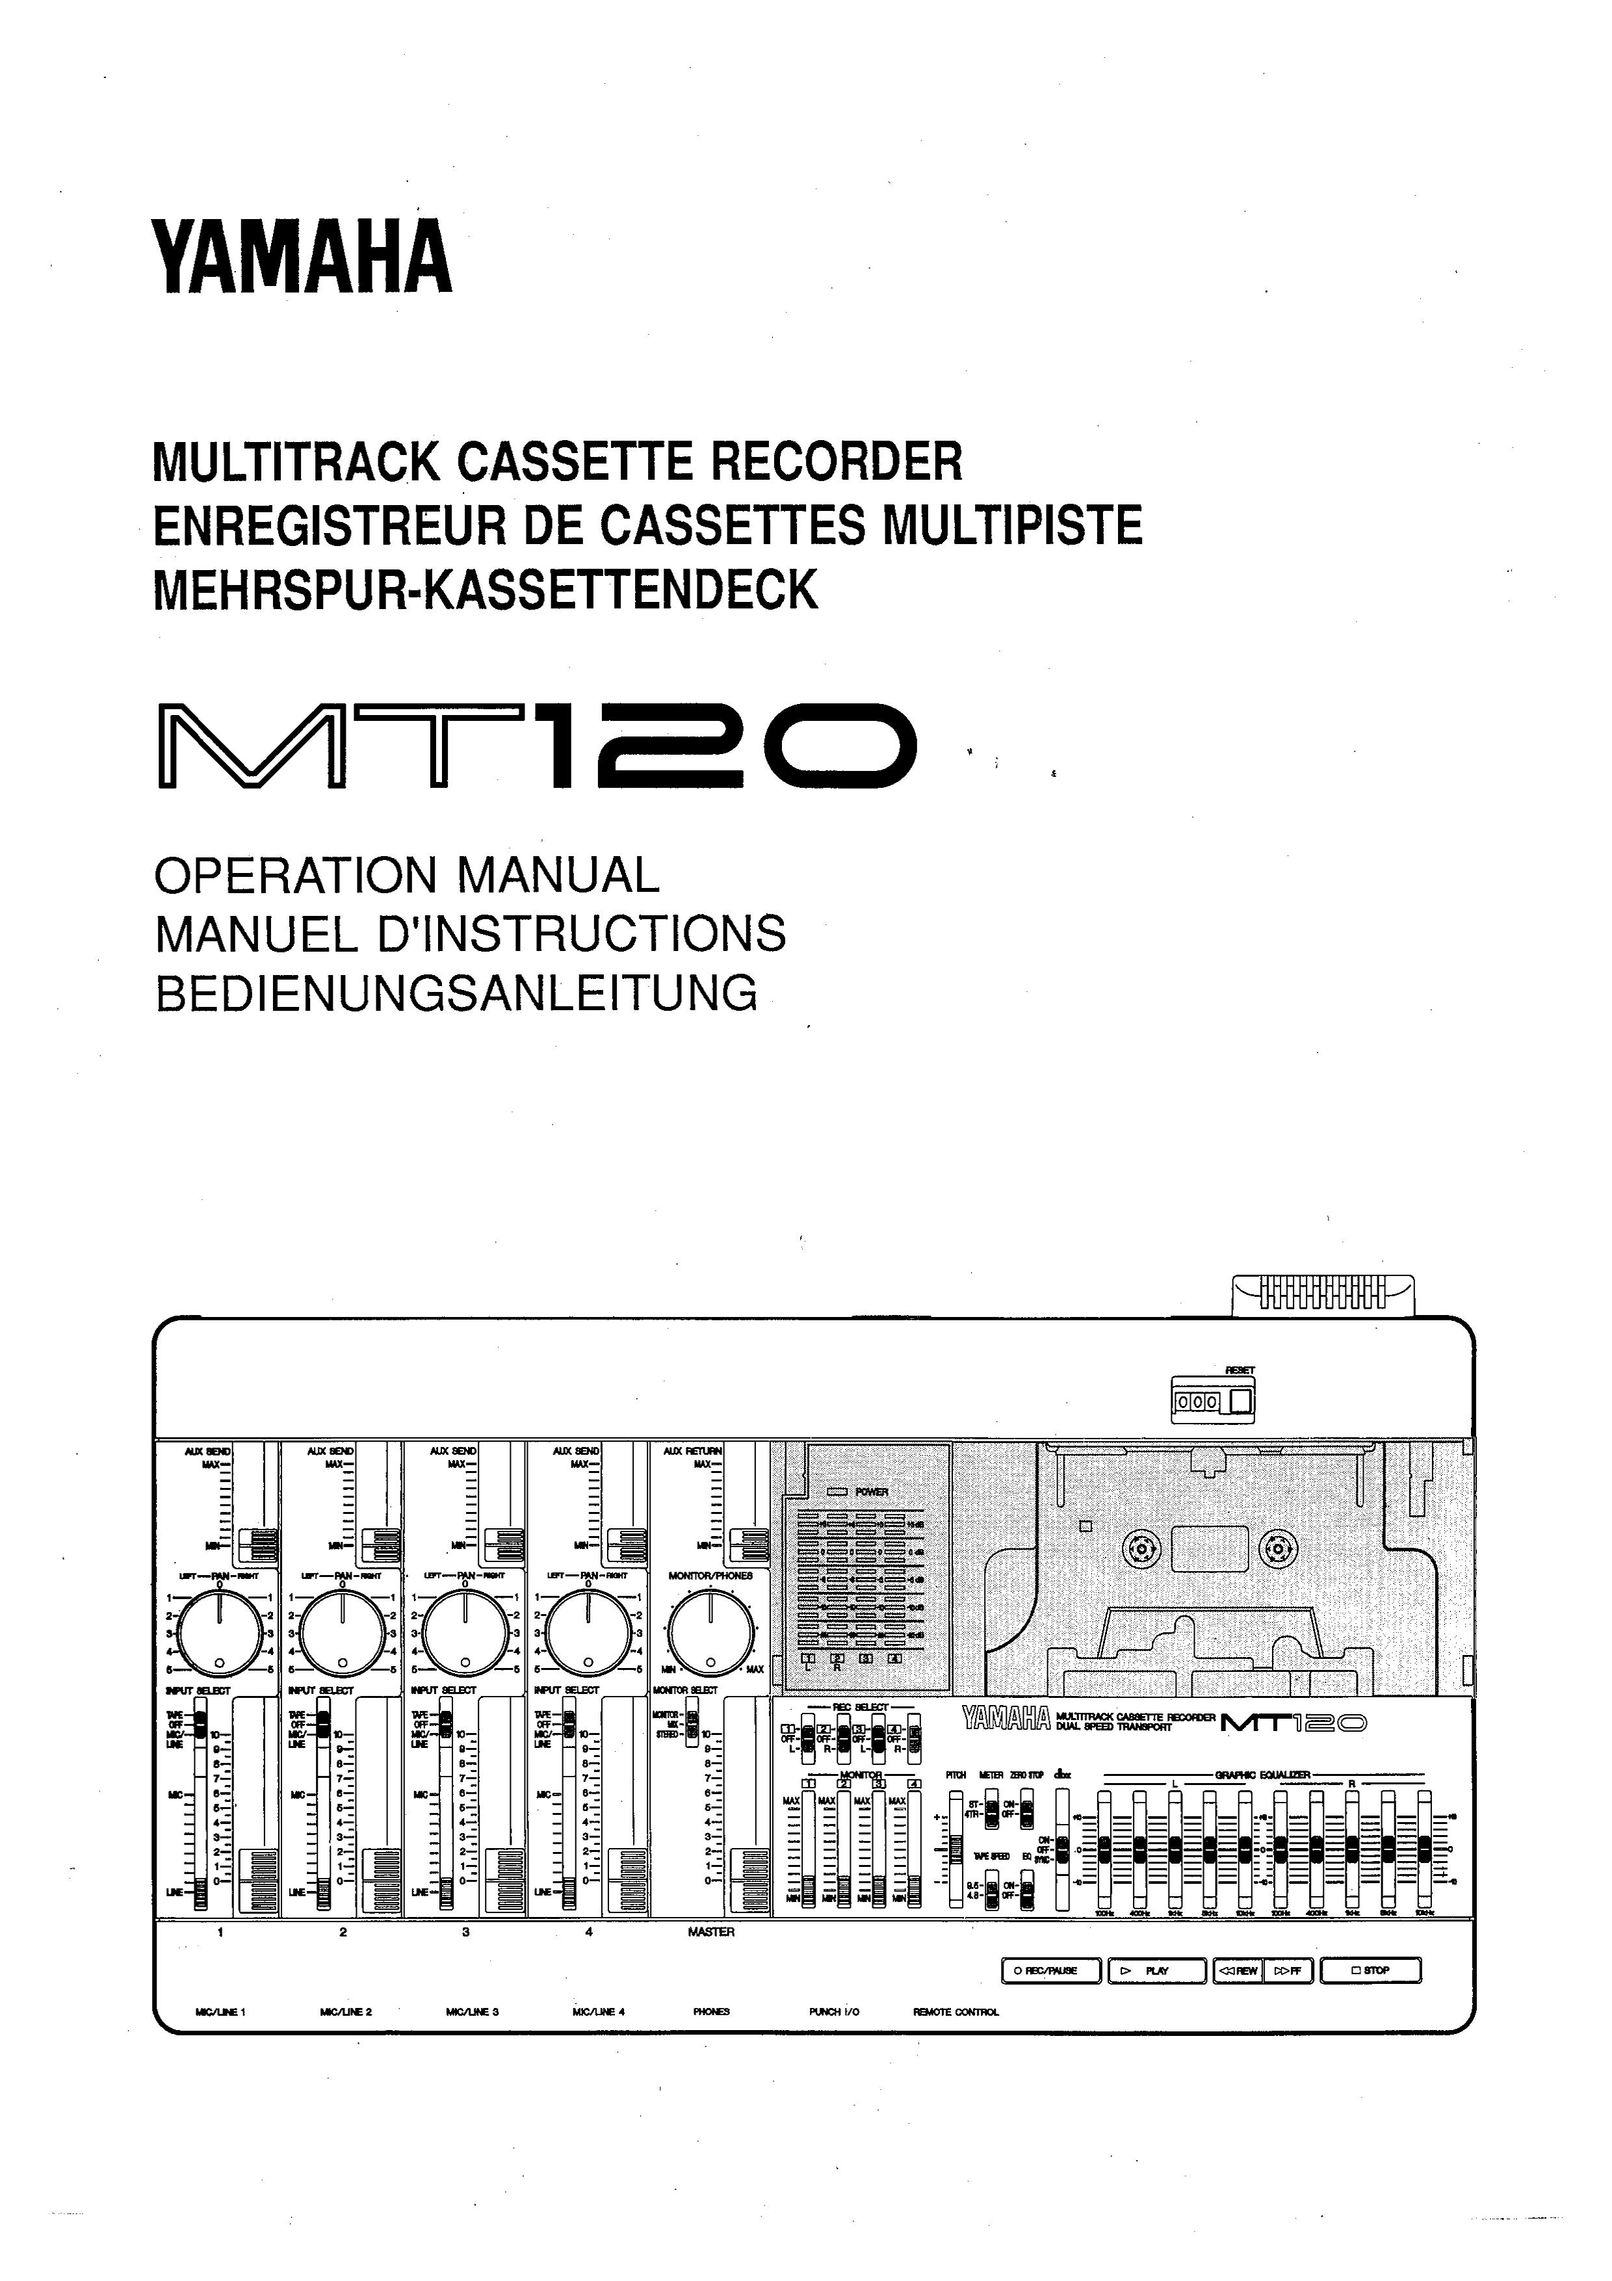 Yamaha MT120 Microcassette Recorder User Manual